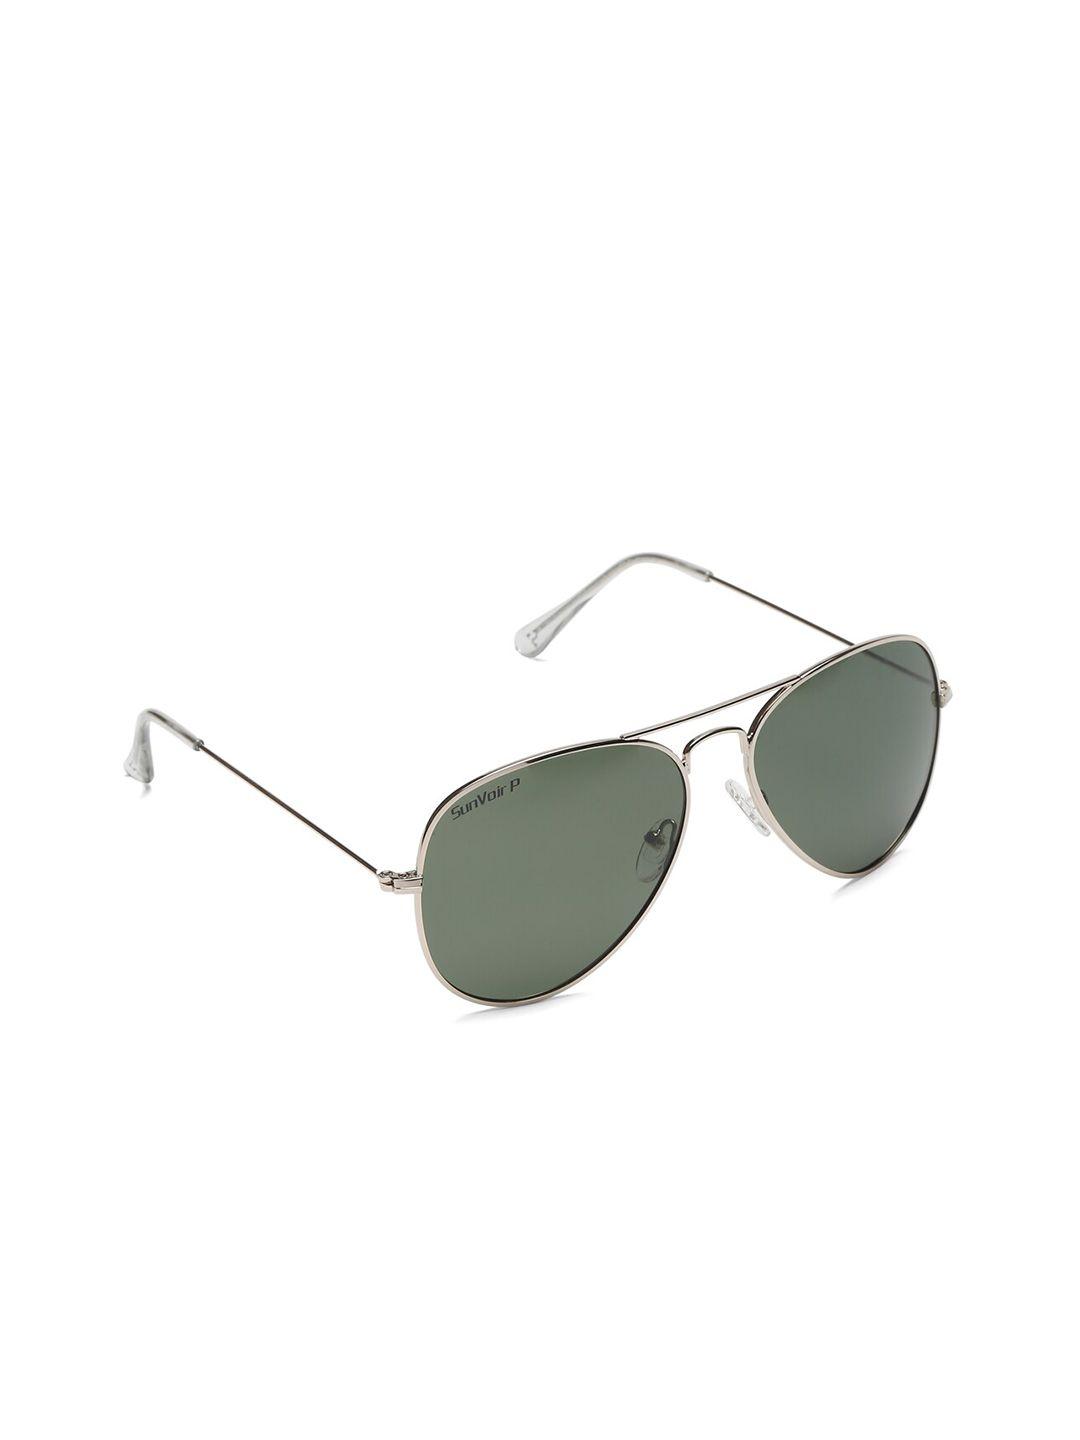 sunvoir unisex green lens & silver-toned aviator sunglasses with polarised lens